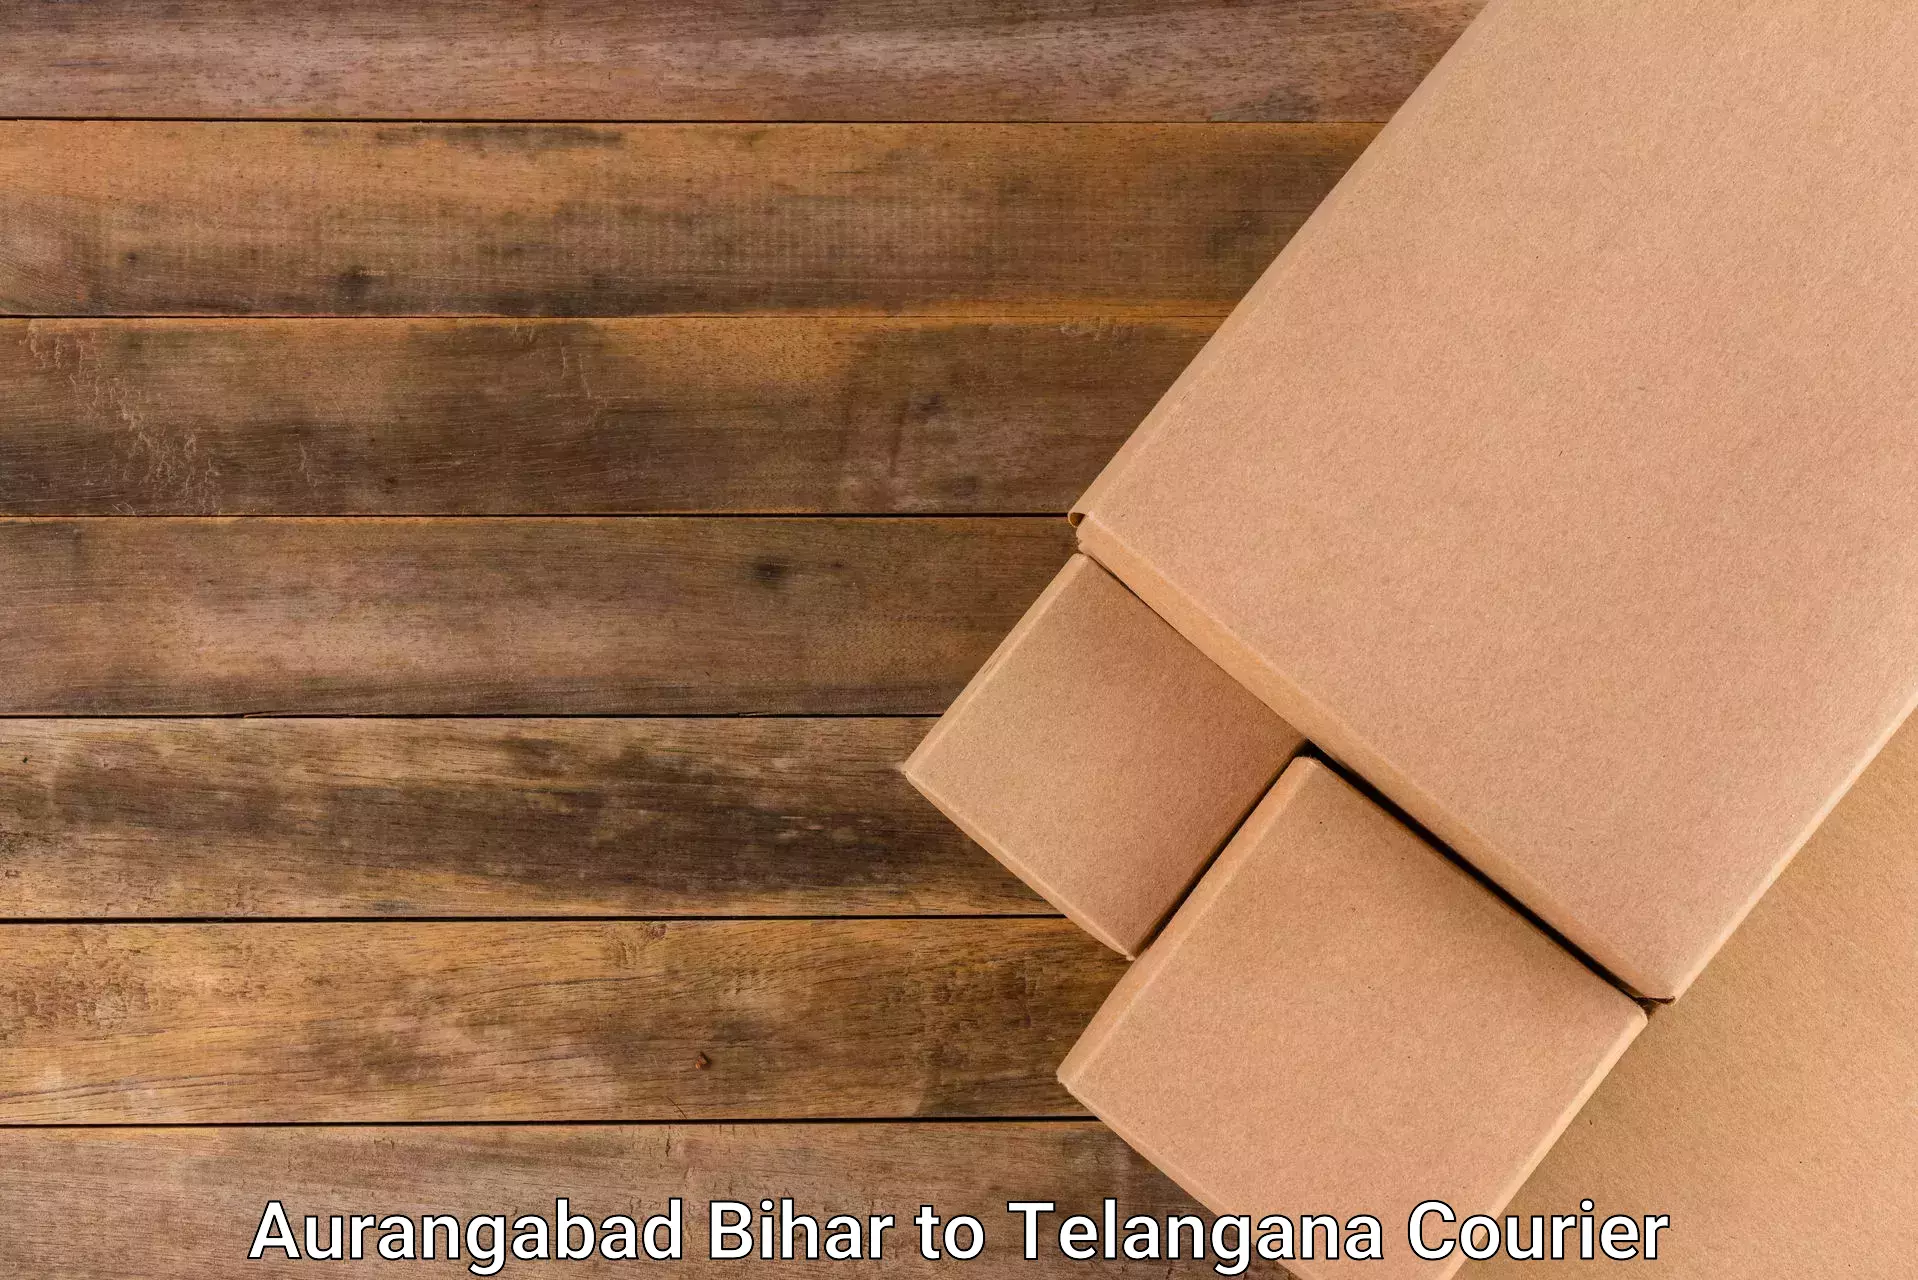 Local courier options Aurangabad Bihar to Manneguda